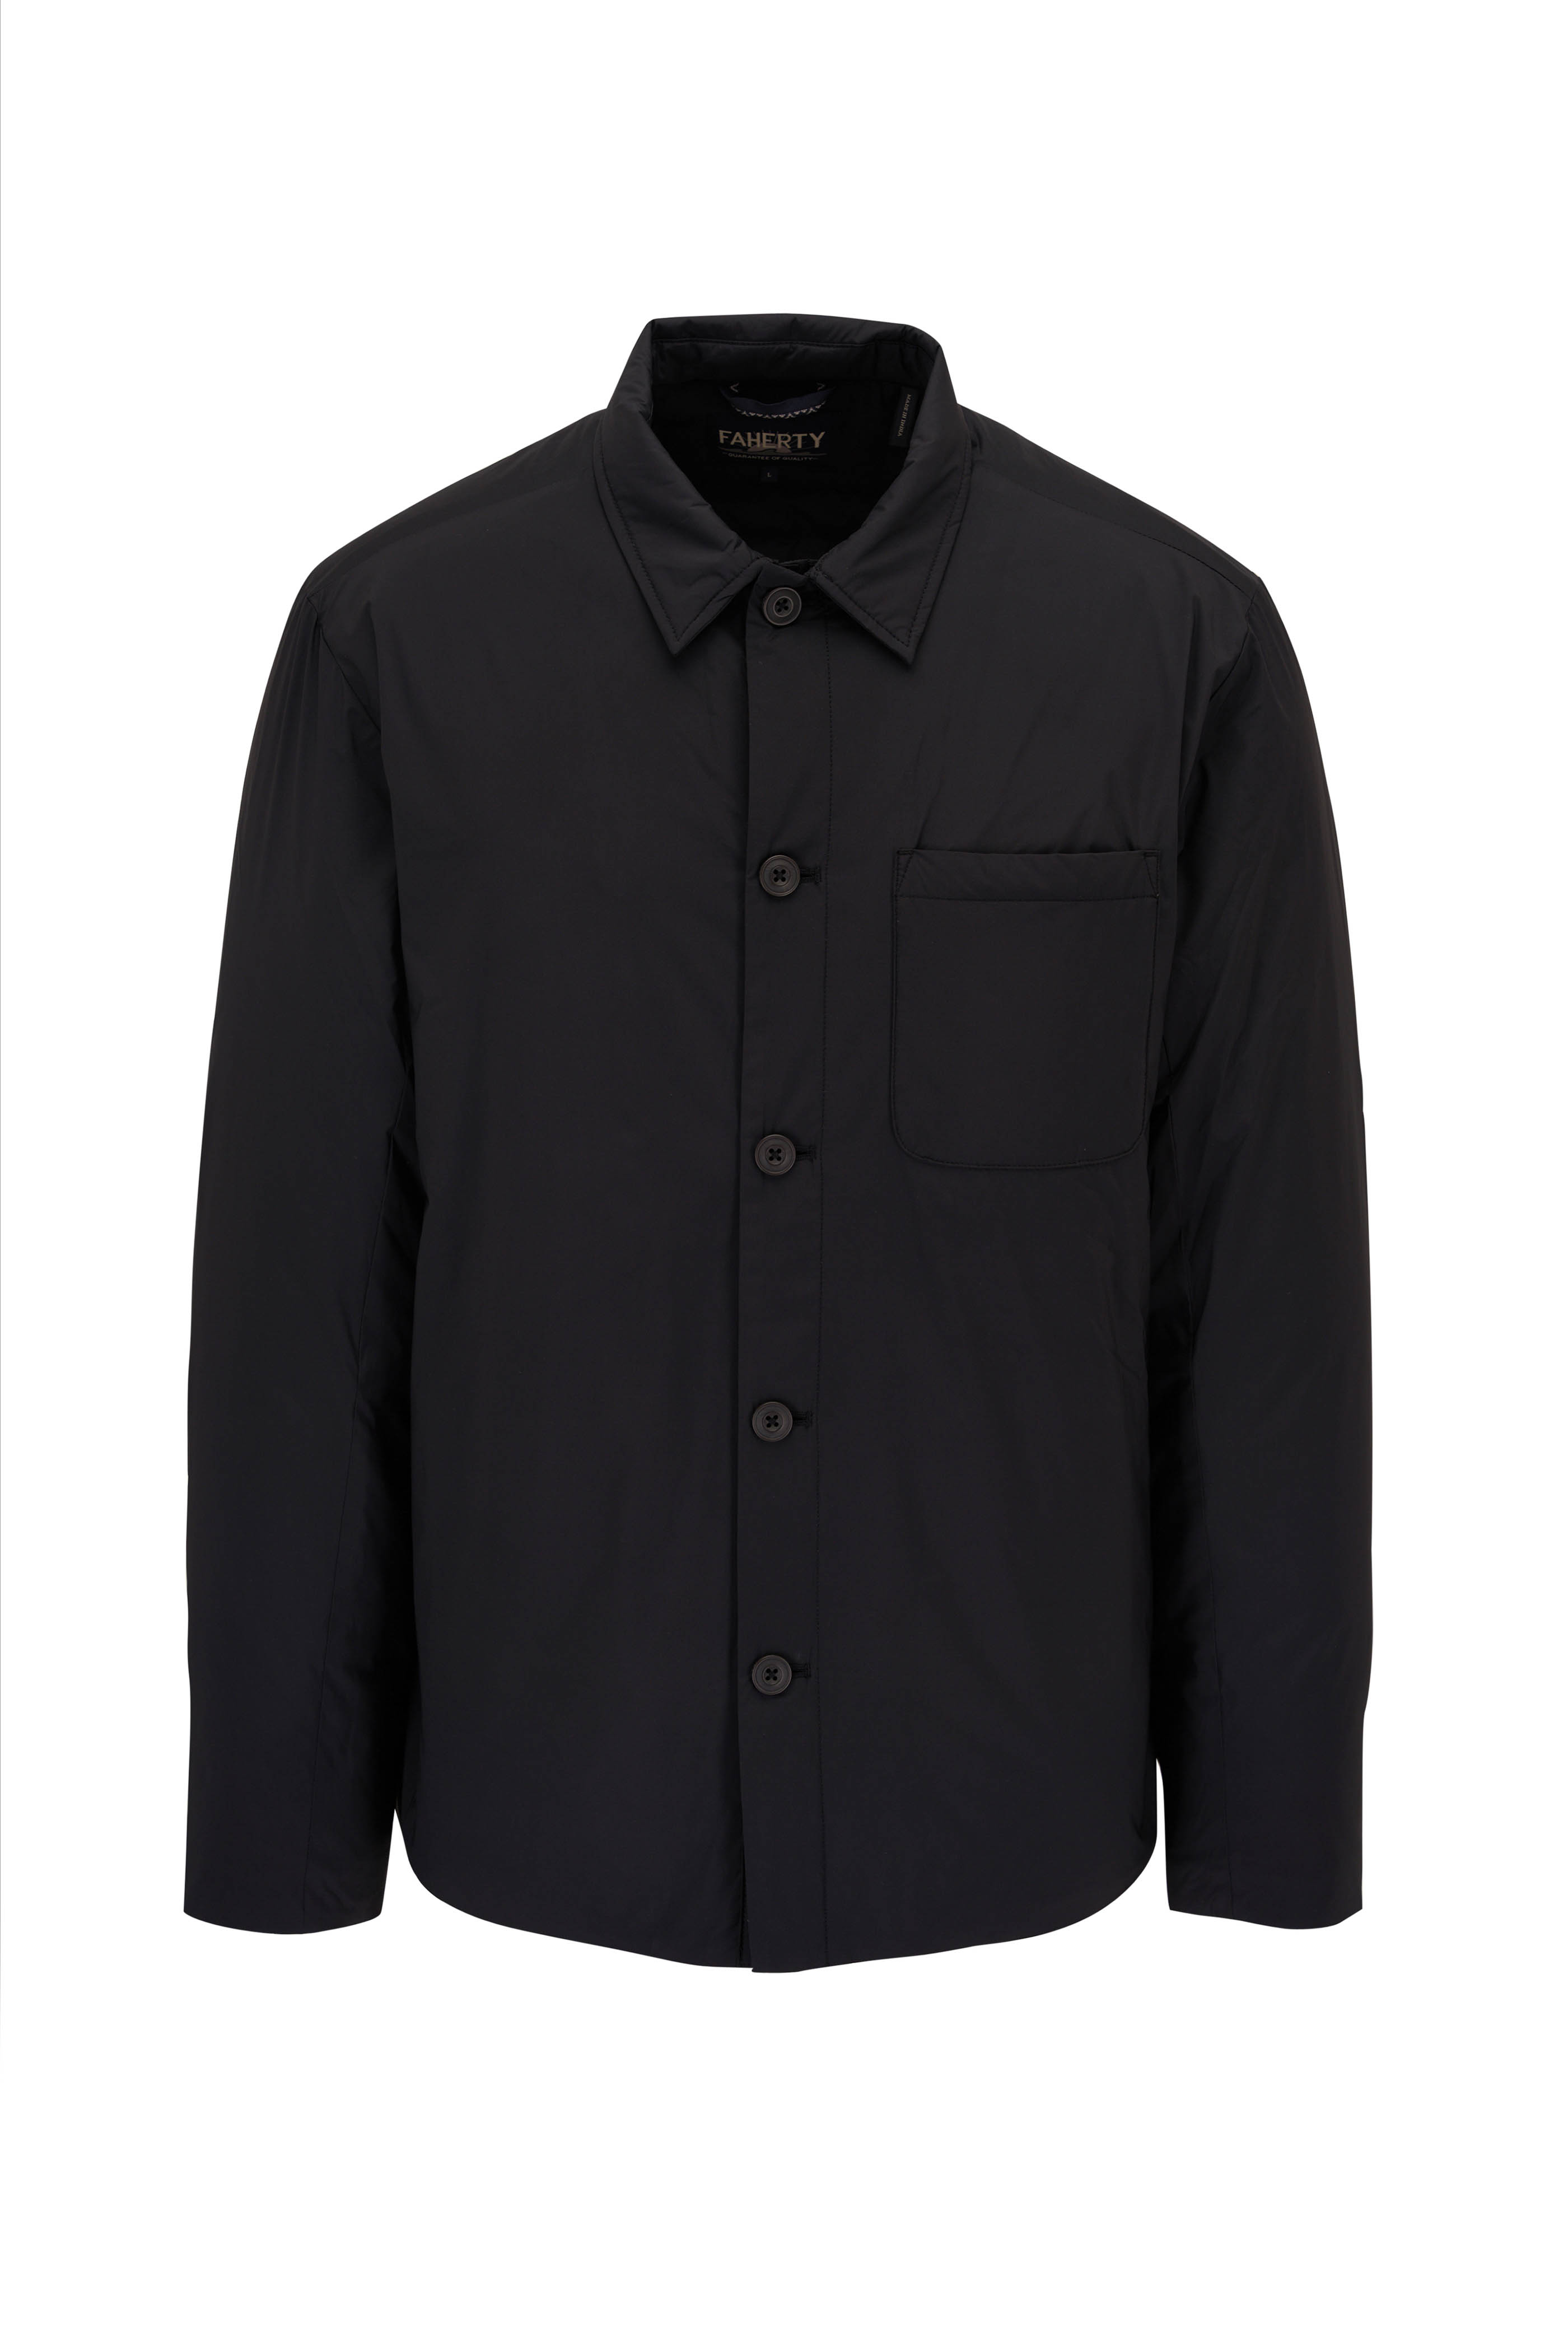 Faherty Men's Seaport Down Jacket - Smoke Black, Size XL,  Polyester/Recycled Poly/Elastane - Yahoo Shopping